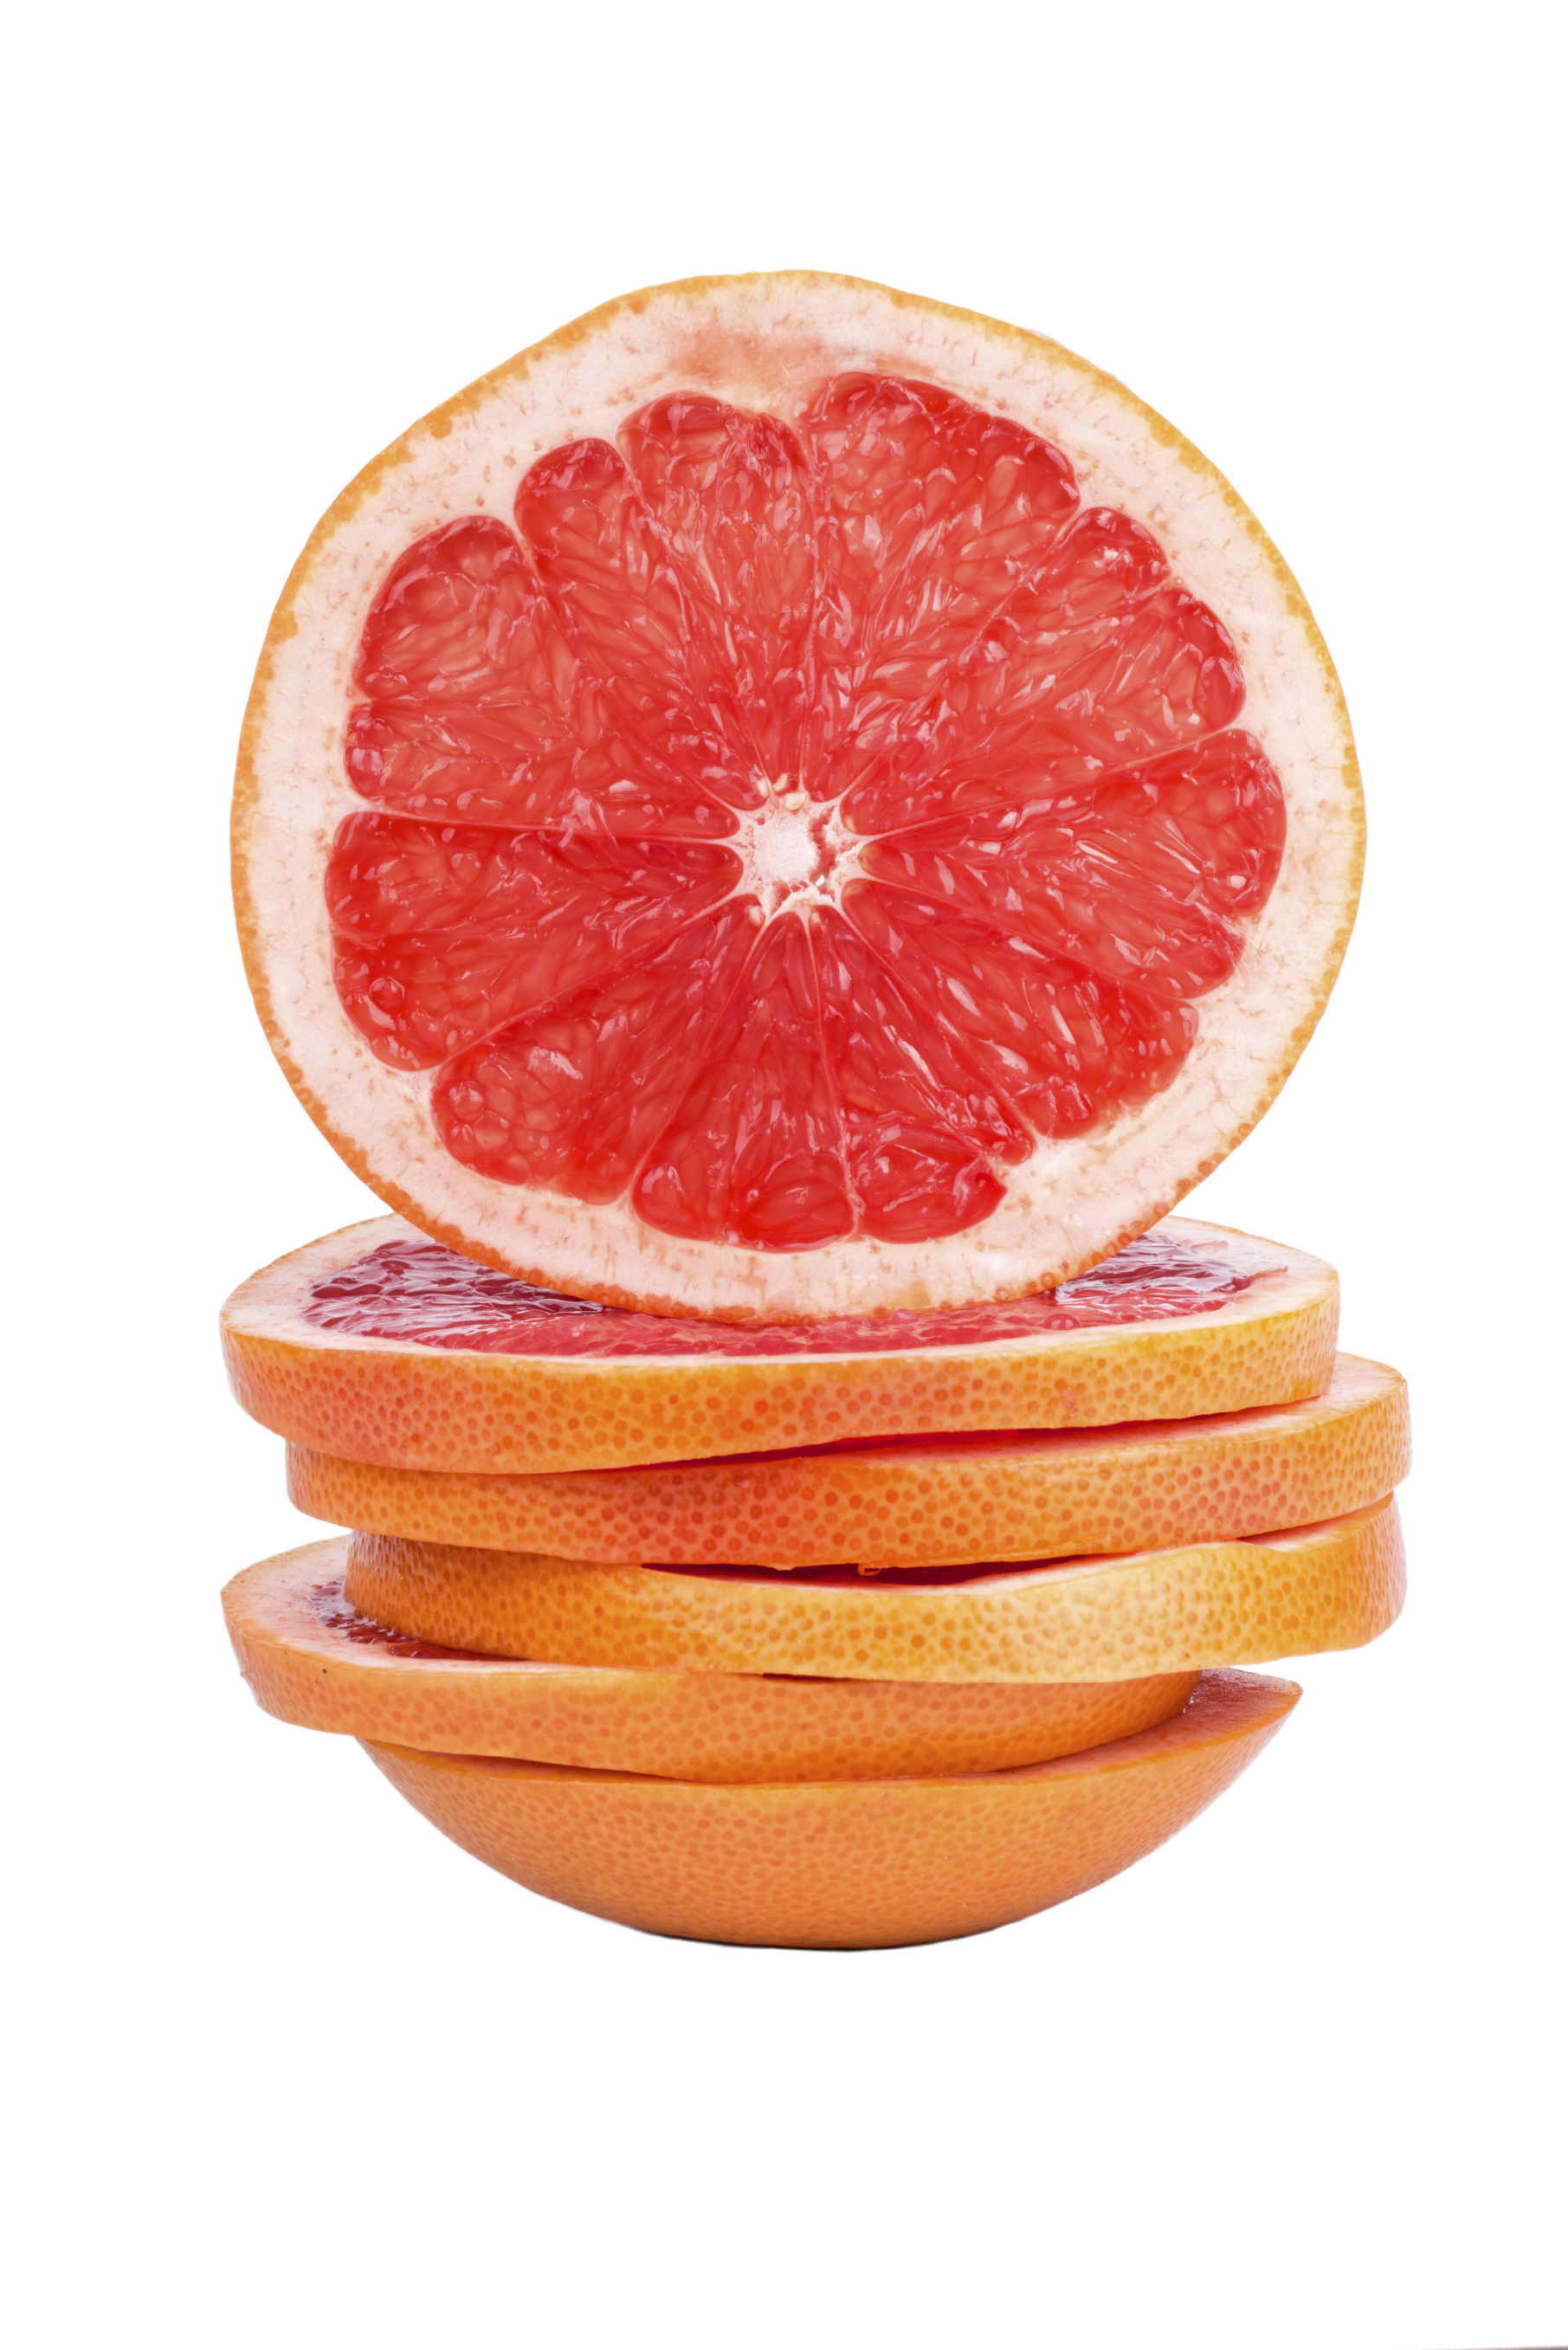 Slice grapefruit photo